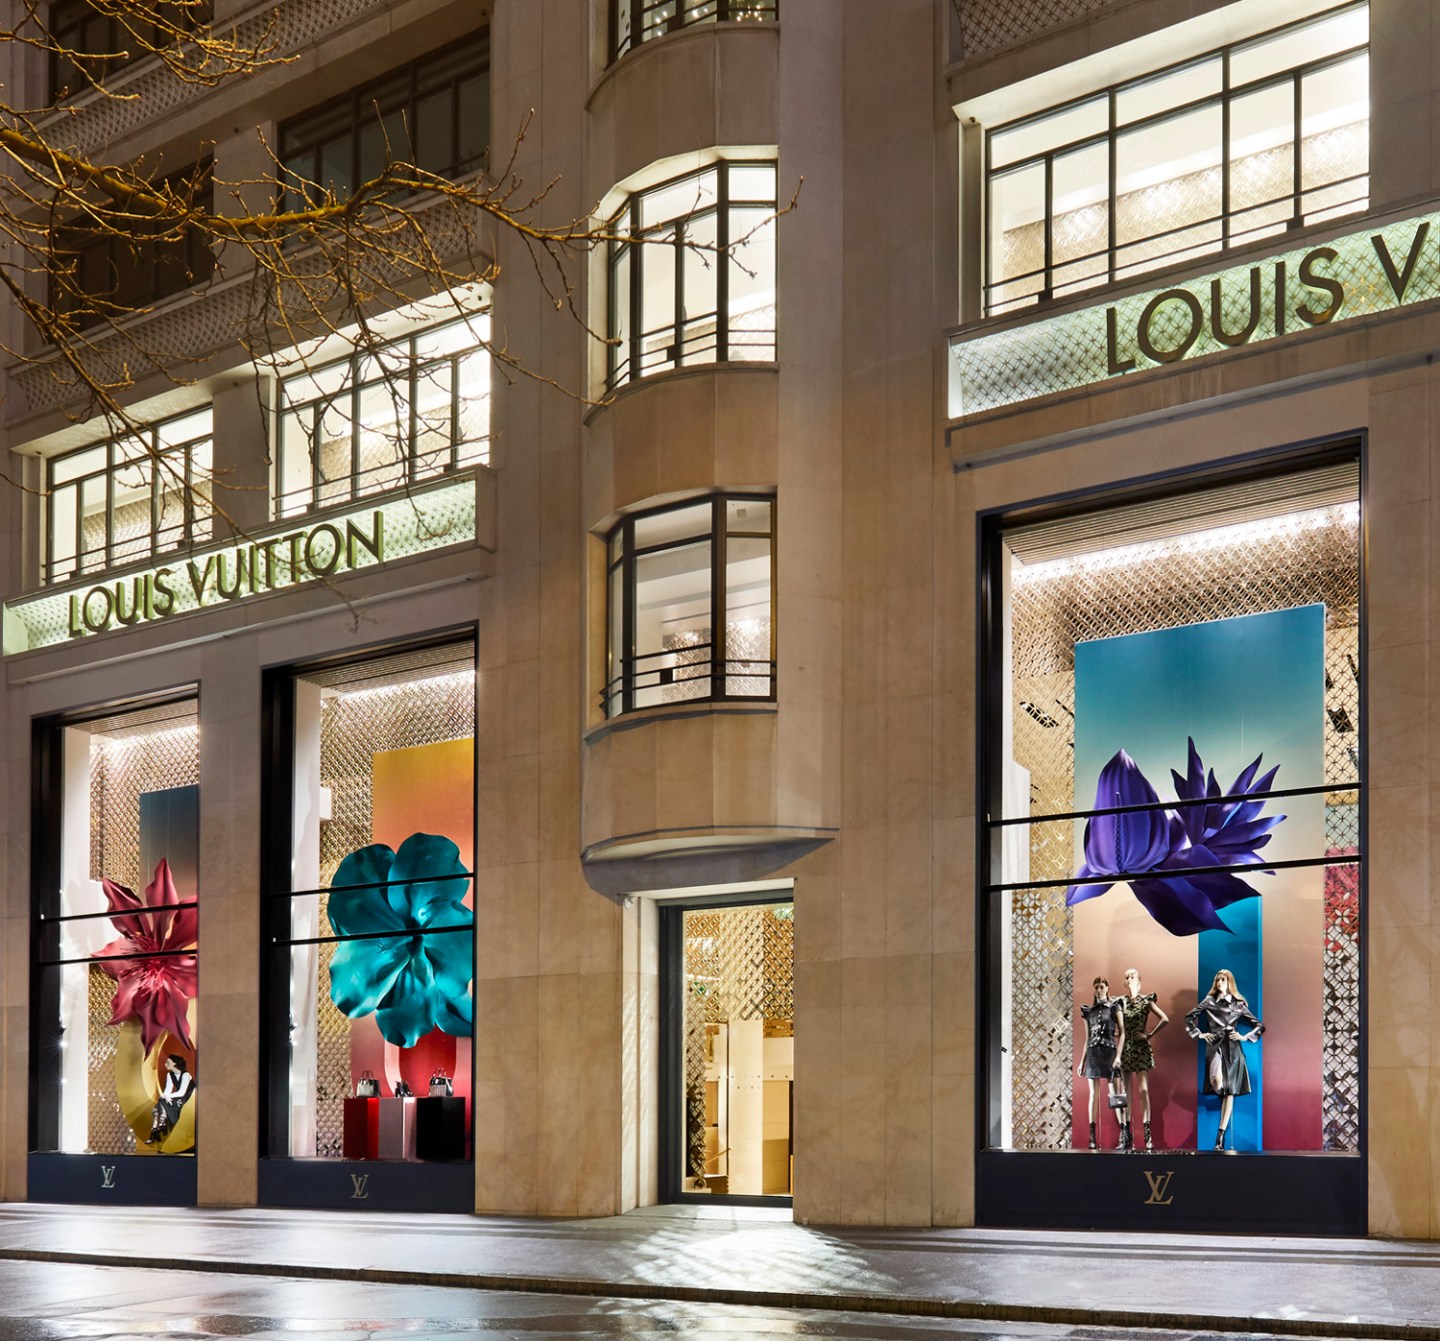 Faye Mcleod on Instagram: “Louis Vuitton Soho, New York City